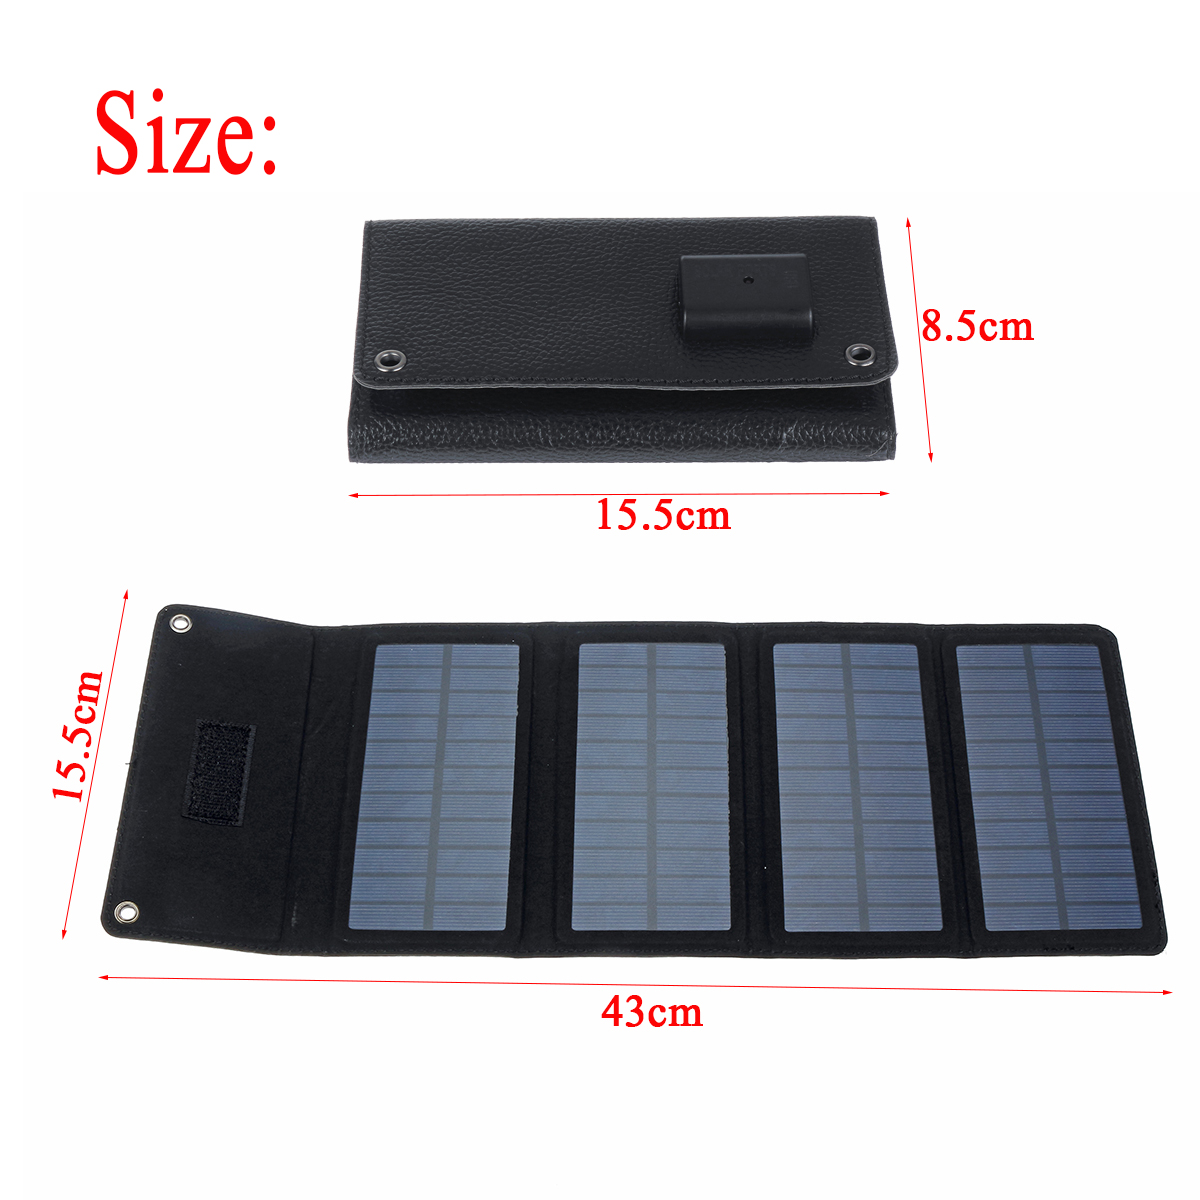 7W 5V Waterproof Foldable Mono-crystalline Silicon Solar Panel With LED Charging indicator & USB Interface 12